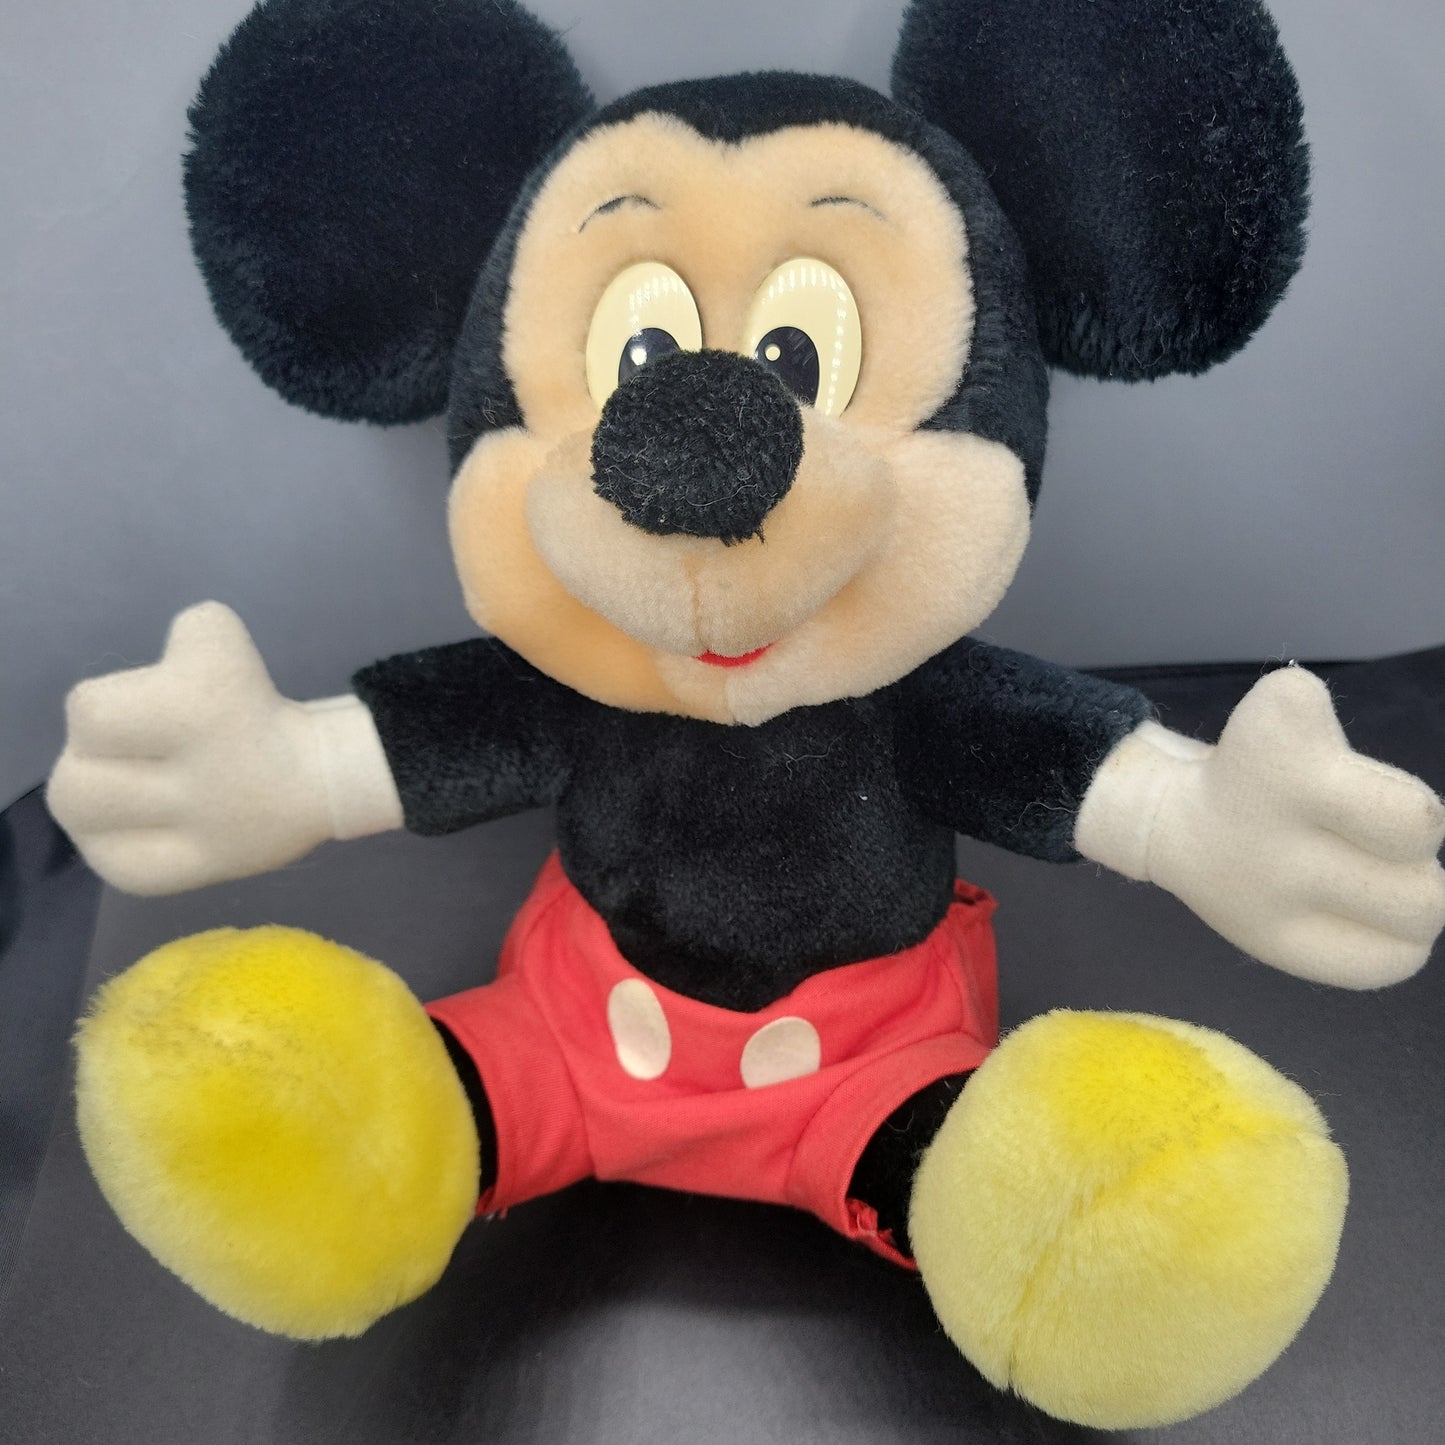 Vintage Disneyland Walt Disney 10" Sitting Mickey Mouse Plush Stuffed Animal Toy